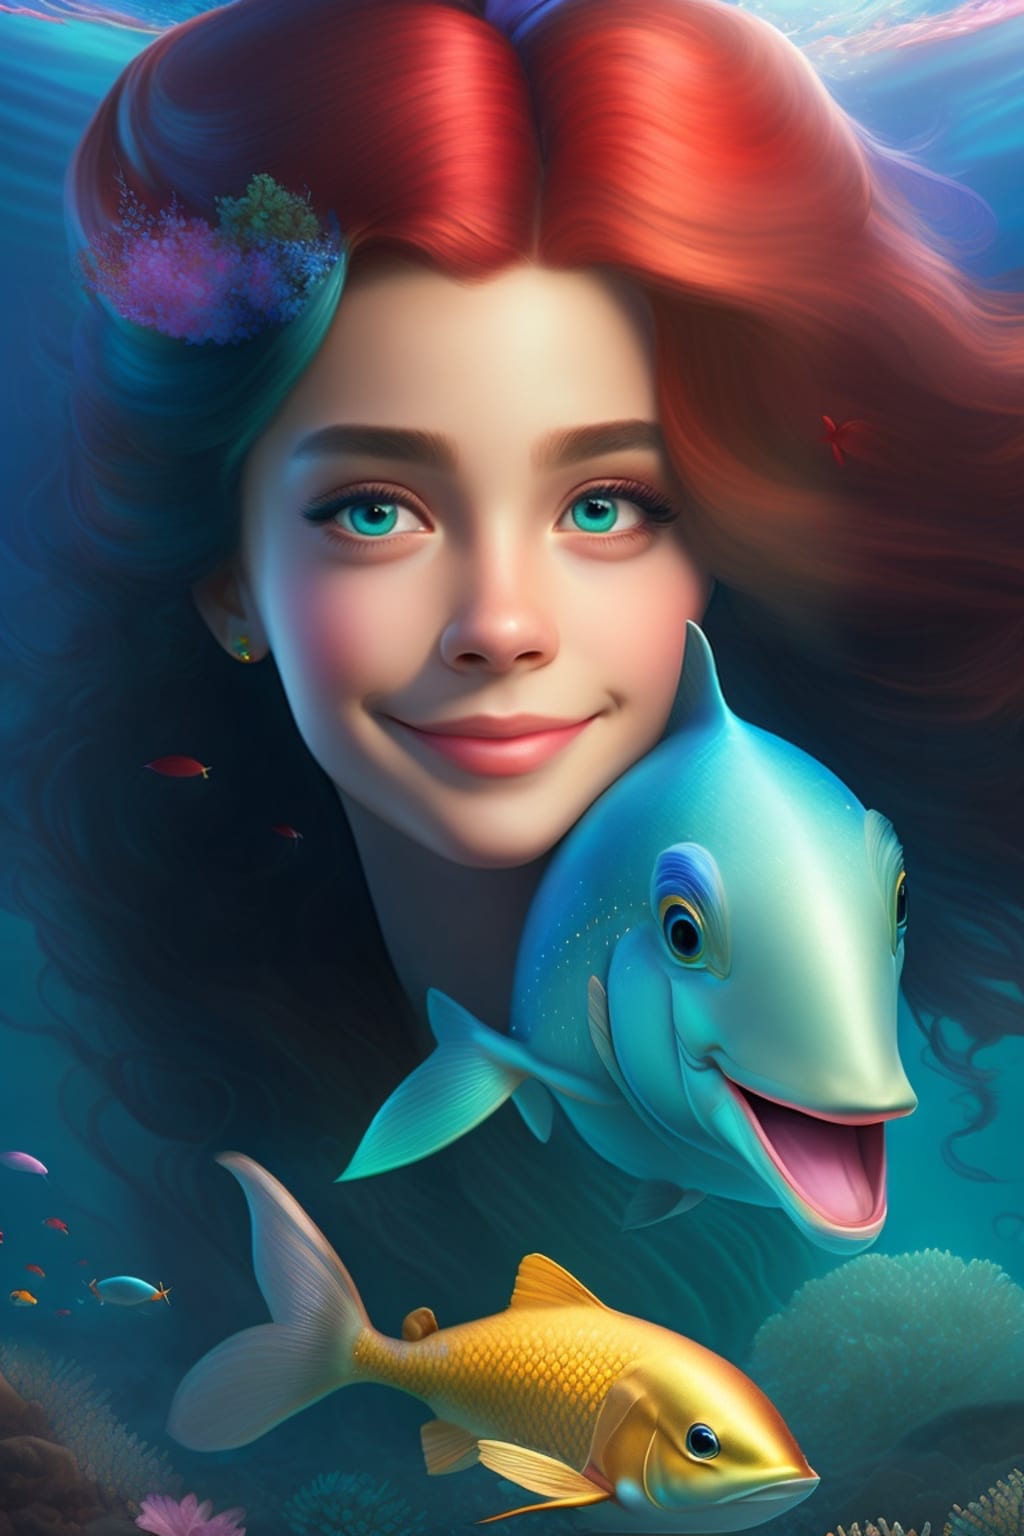 Disney Coffee Cup - The Little Mermaid Ariel and Eric Lagoon